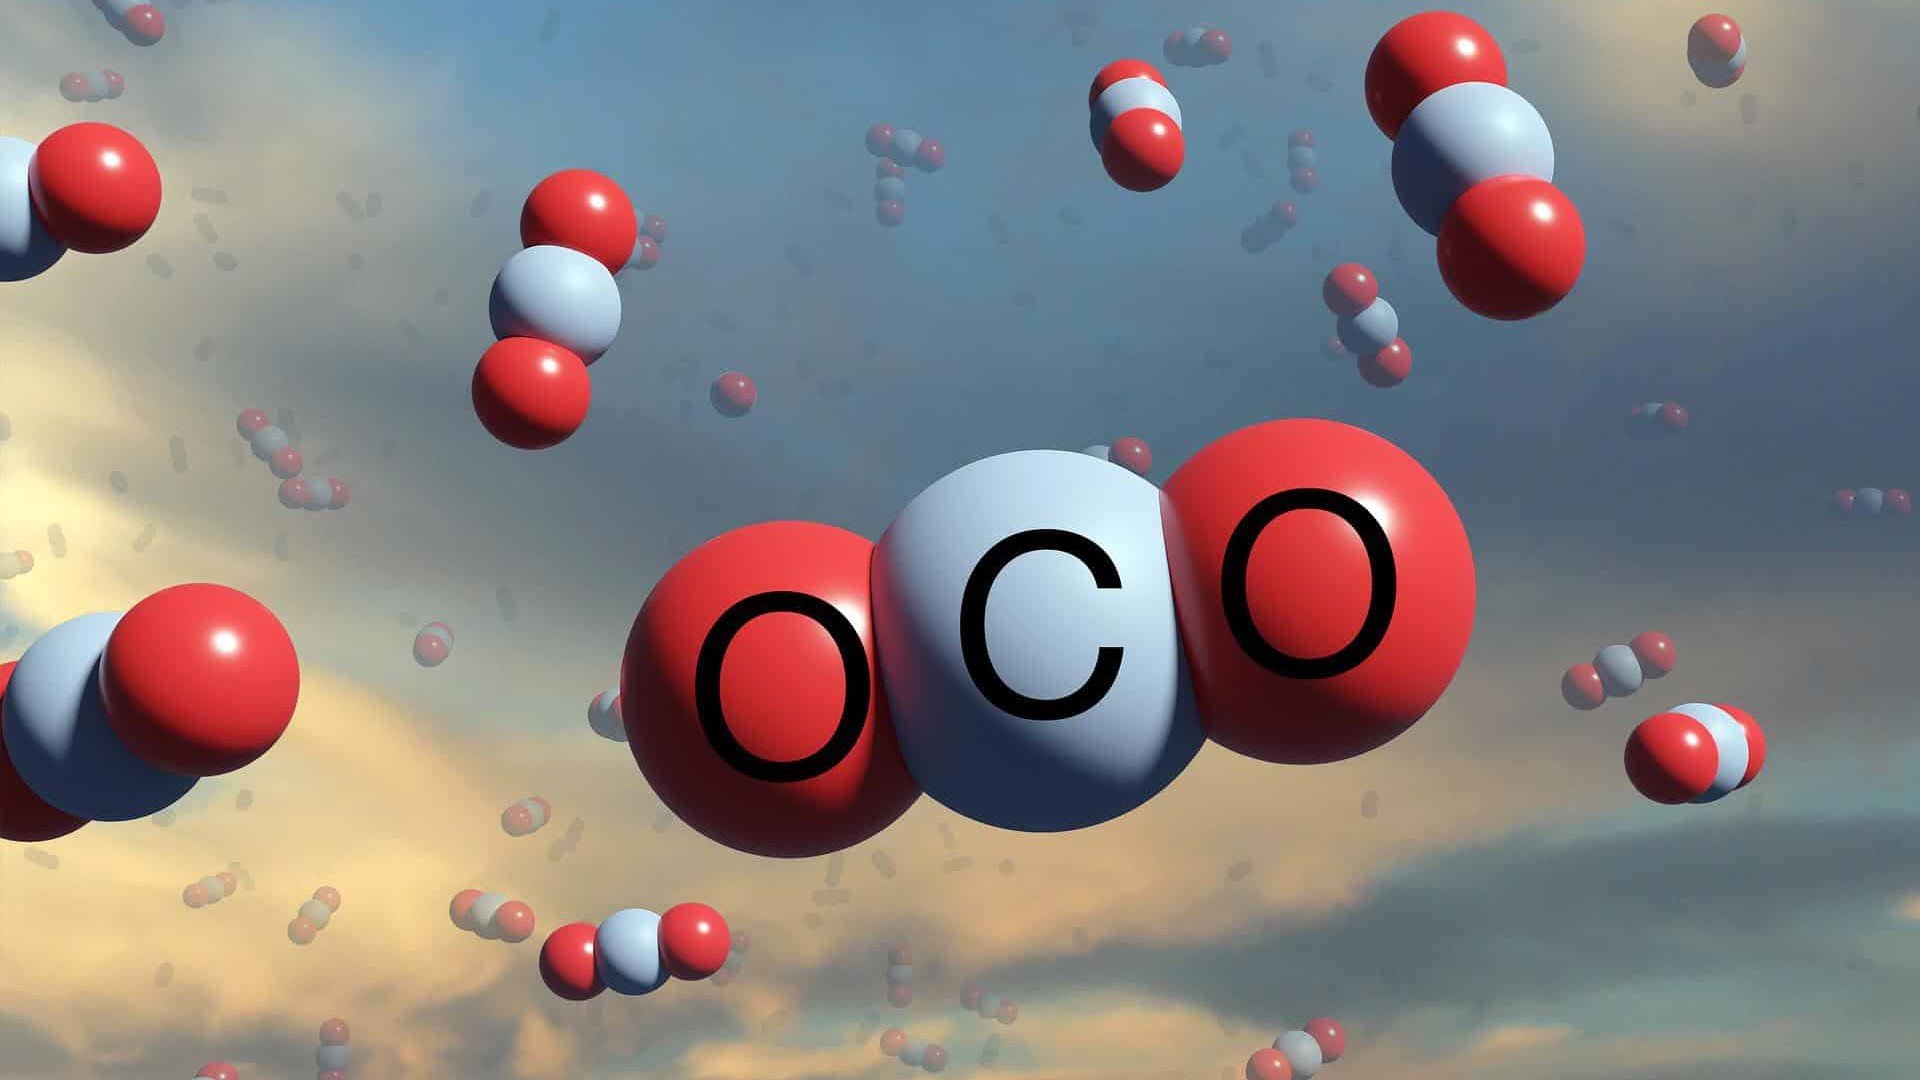 CO2 molecules image - 1